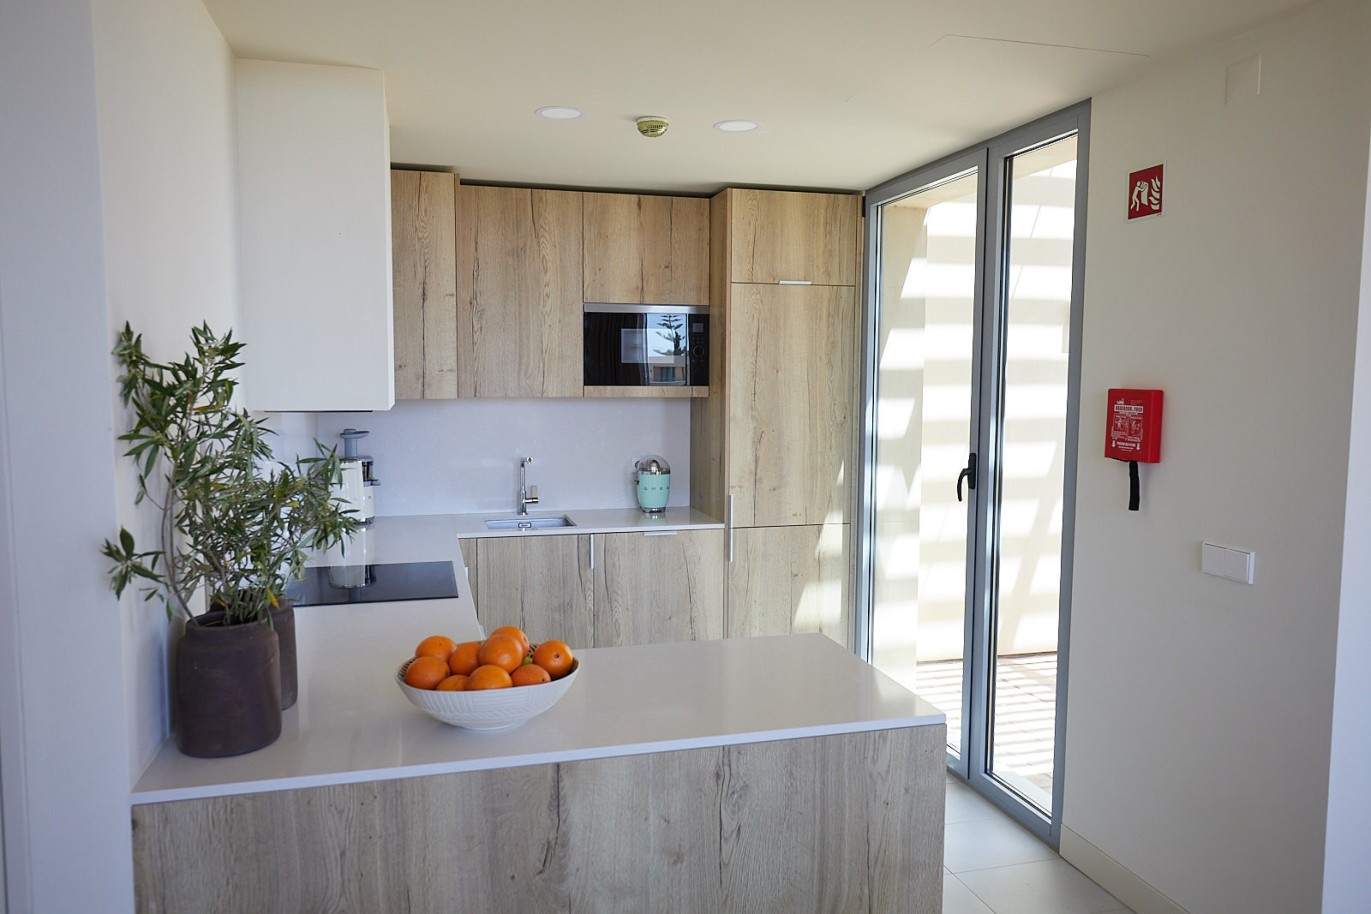 2 bedroom apartment in resort, for sale in Porches, Algarve_229220